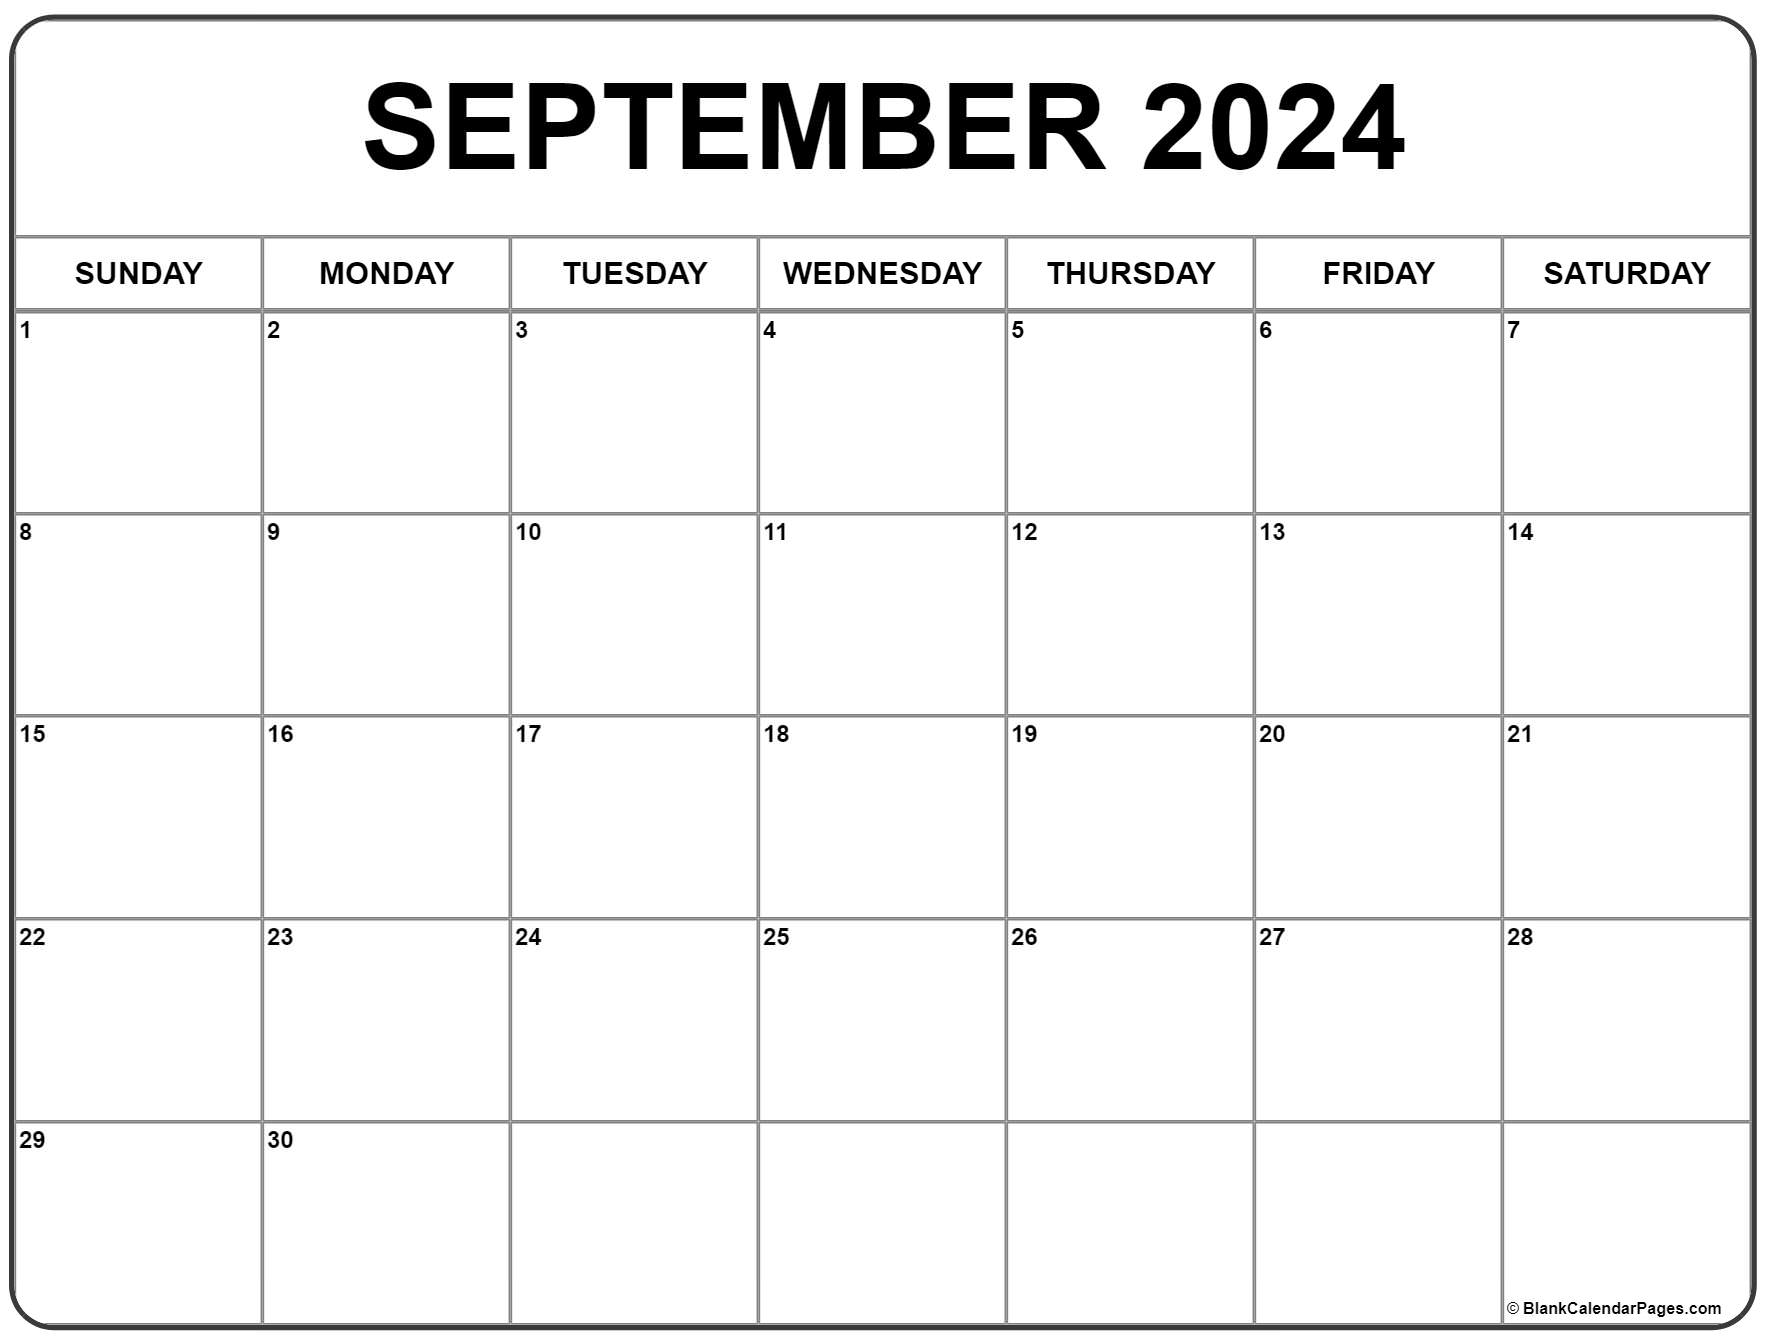 September 2024 Calendar | Free Printable Calendar for 2024 September Printable Calendar